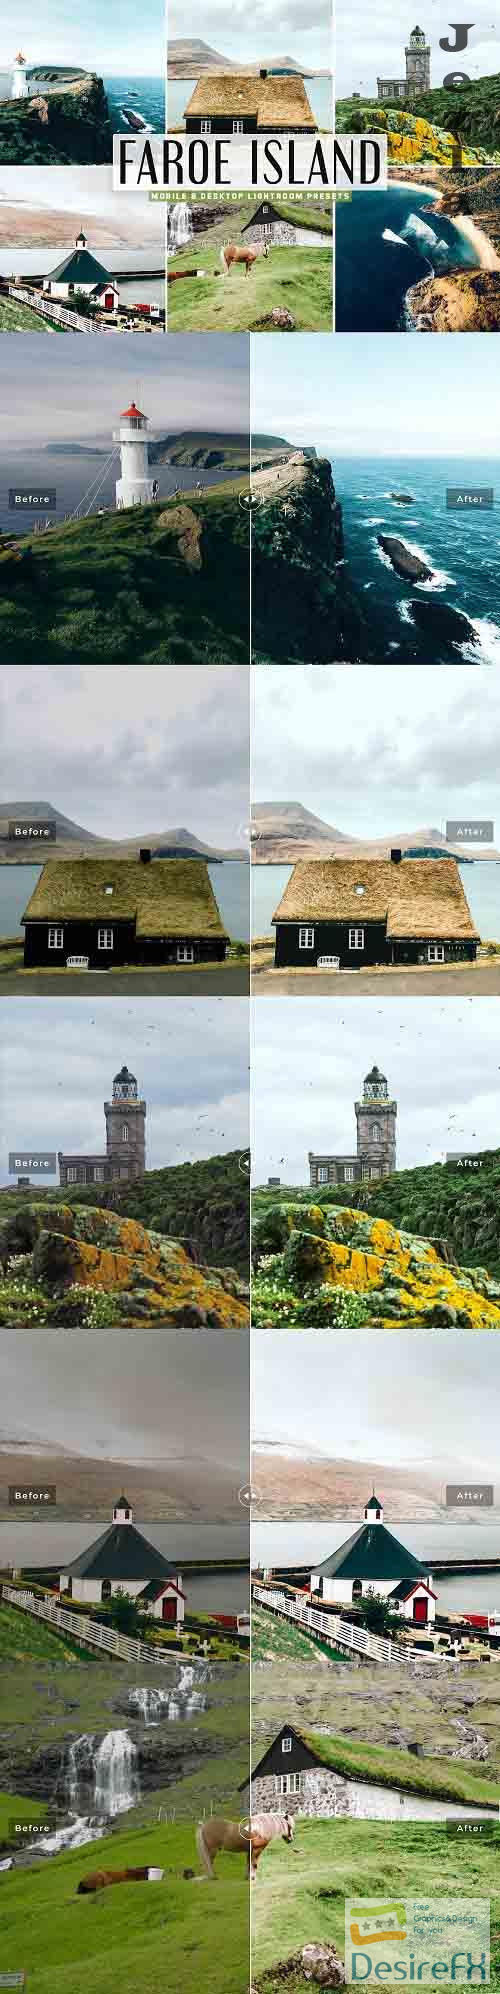 Faroe Island Pro Lightroom Presets - 5336449 - Mobile &amp; Desktop